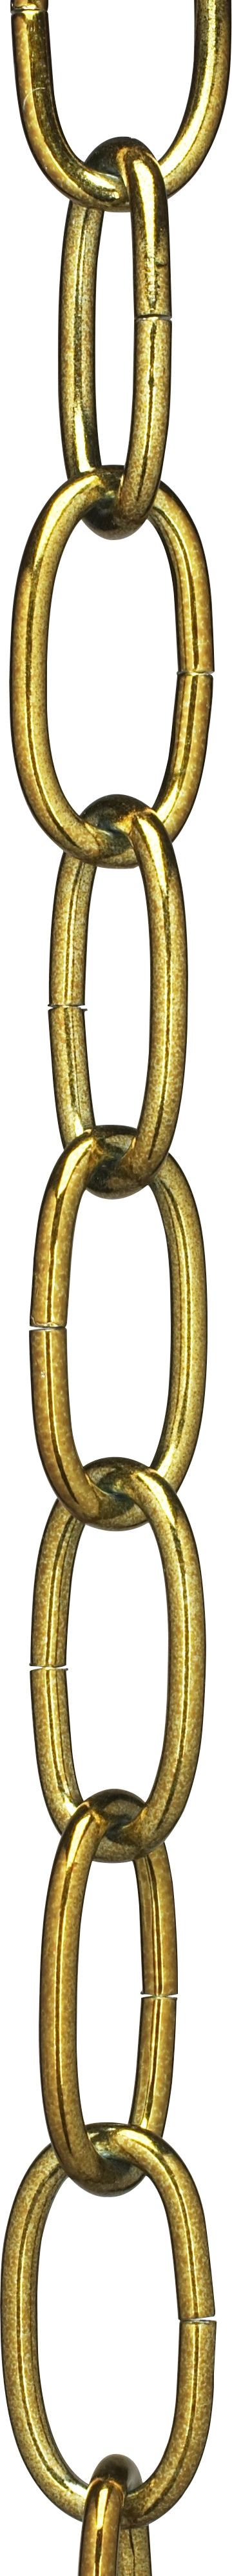 SATCO/NUVO 8 Gauge Chain Antique Brass Finish 1 Yard Len 11/2 Inch Link Len 7/8 Inch Link Wide 1/8 Inch Thick 100 Yard Per Carton (79-464)